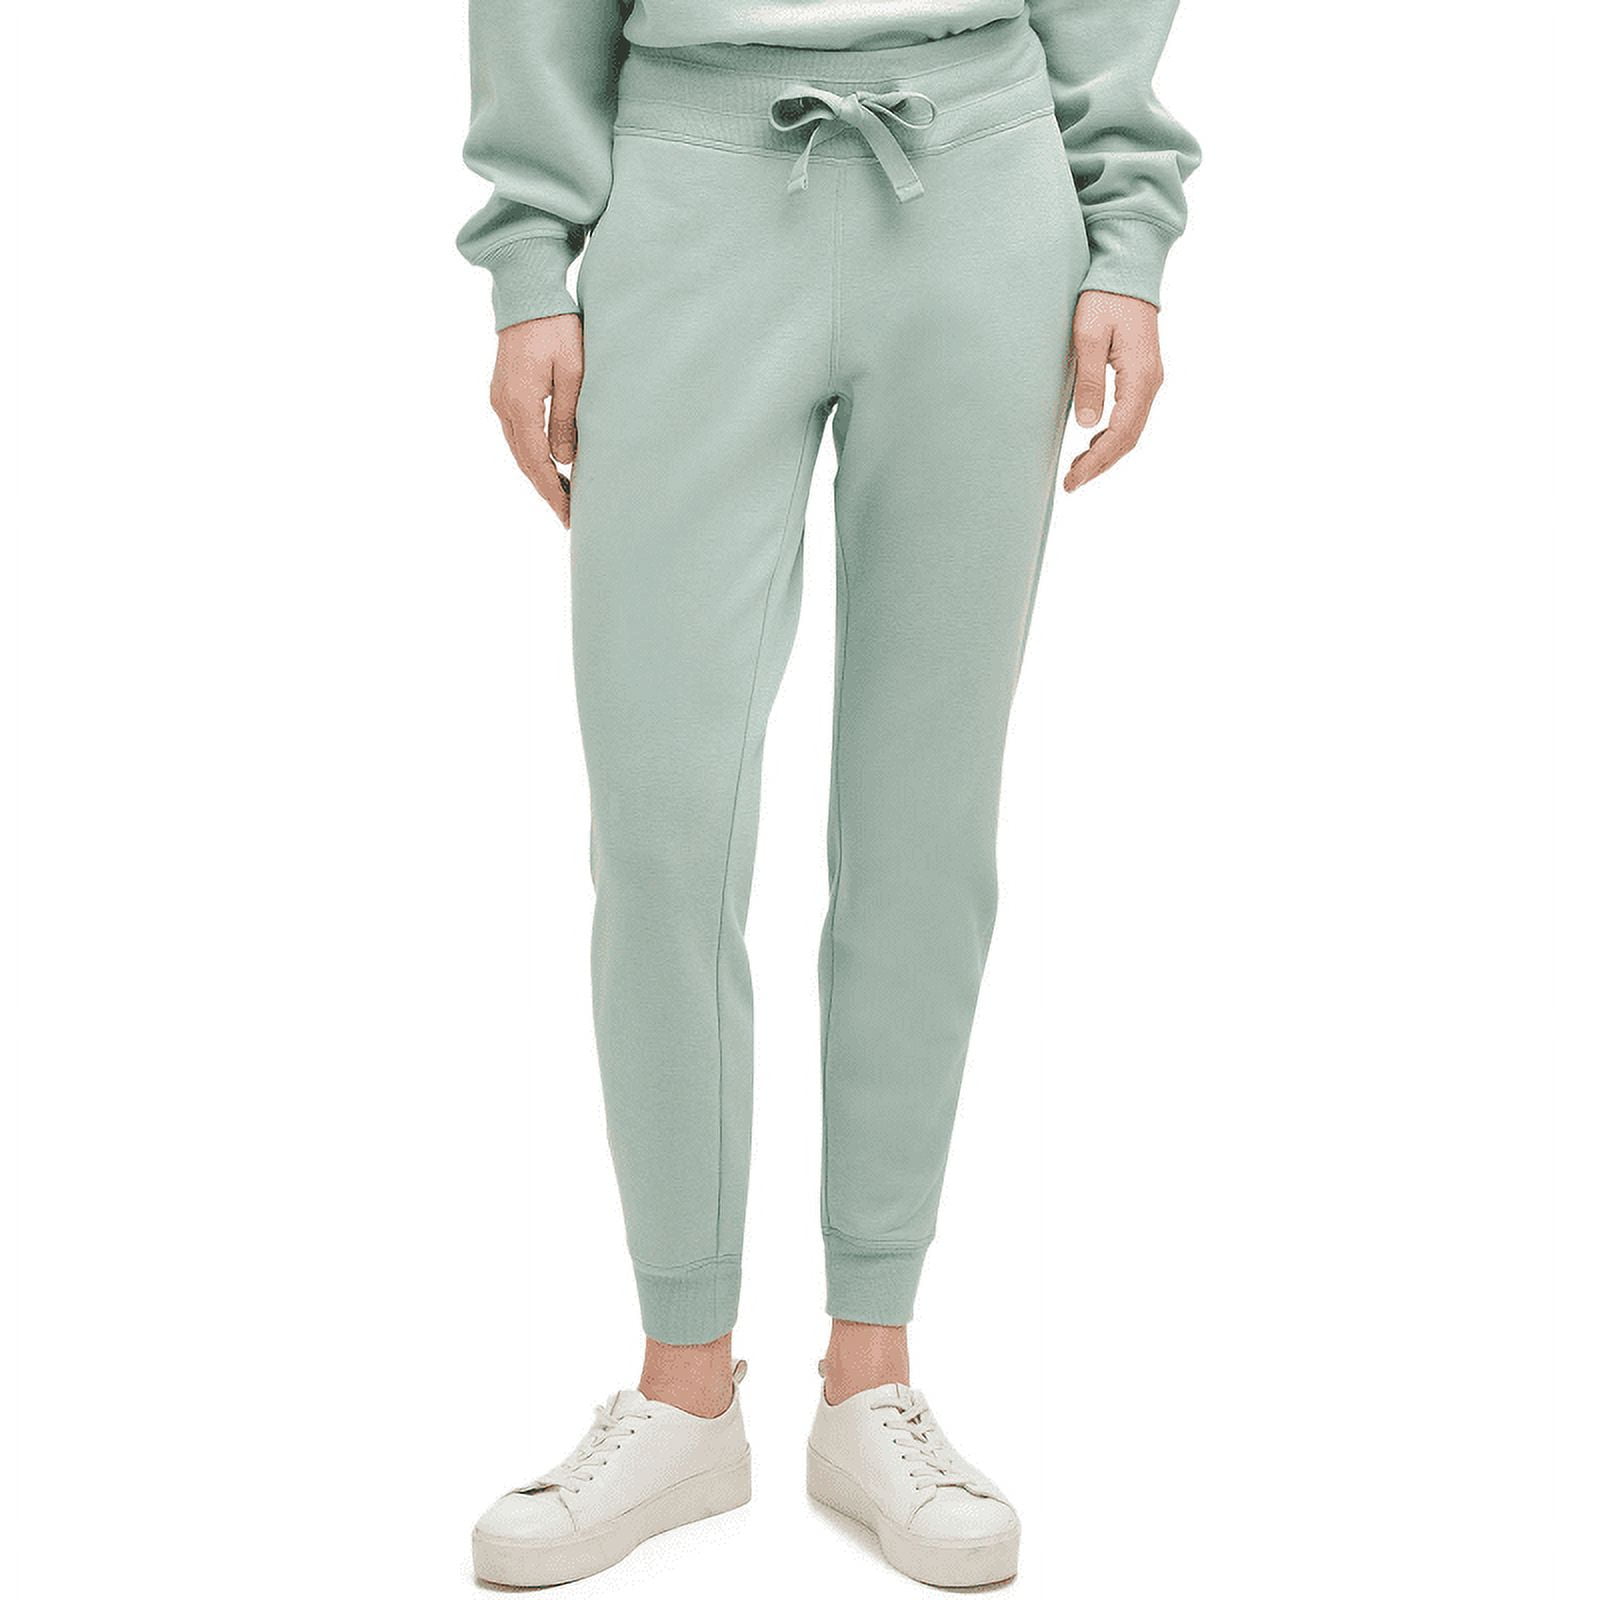 Calvin Klein Women's Logo Fleece Lined Jogger Sweatpants (JPR/Jasper, S)